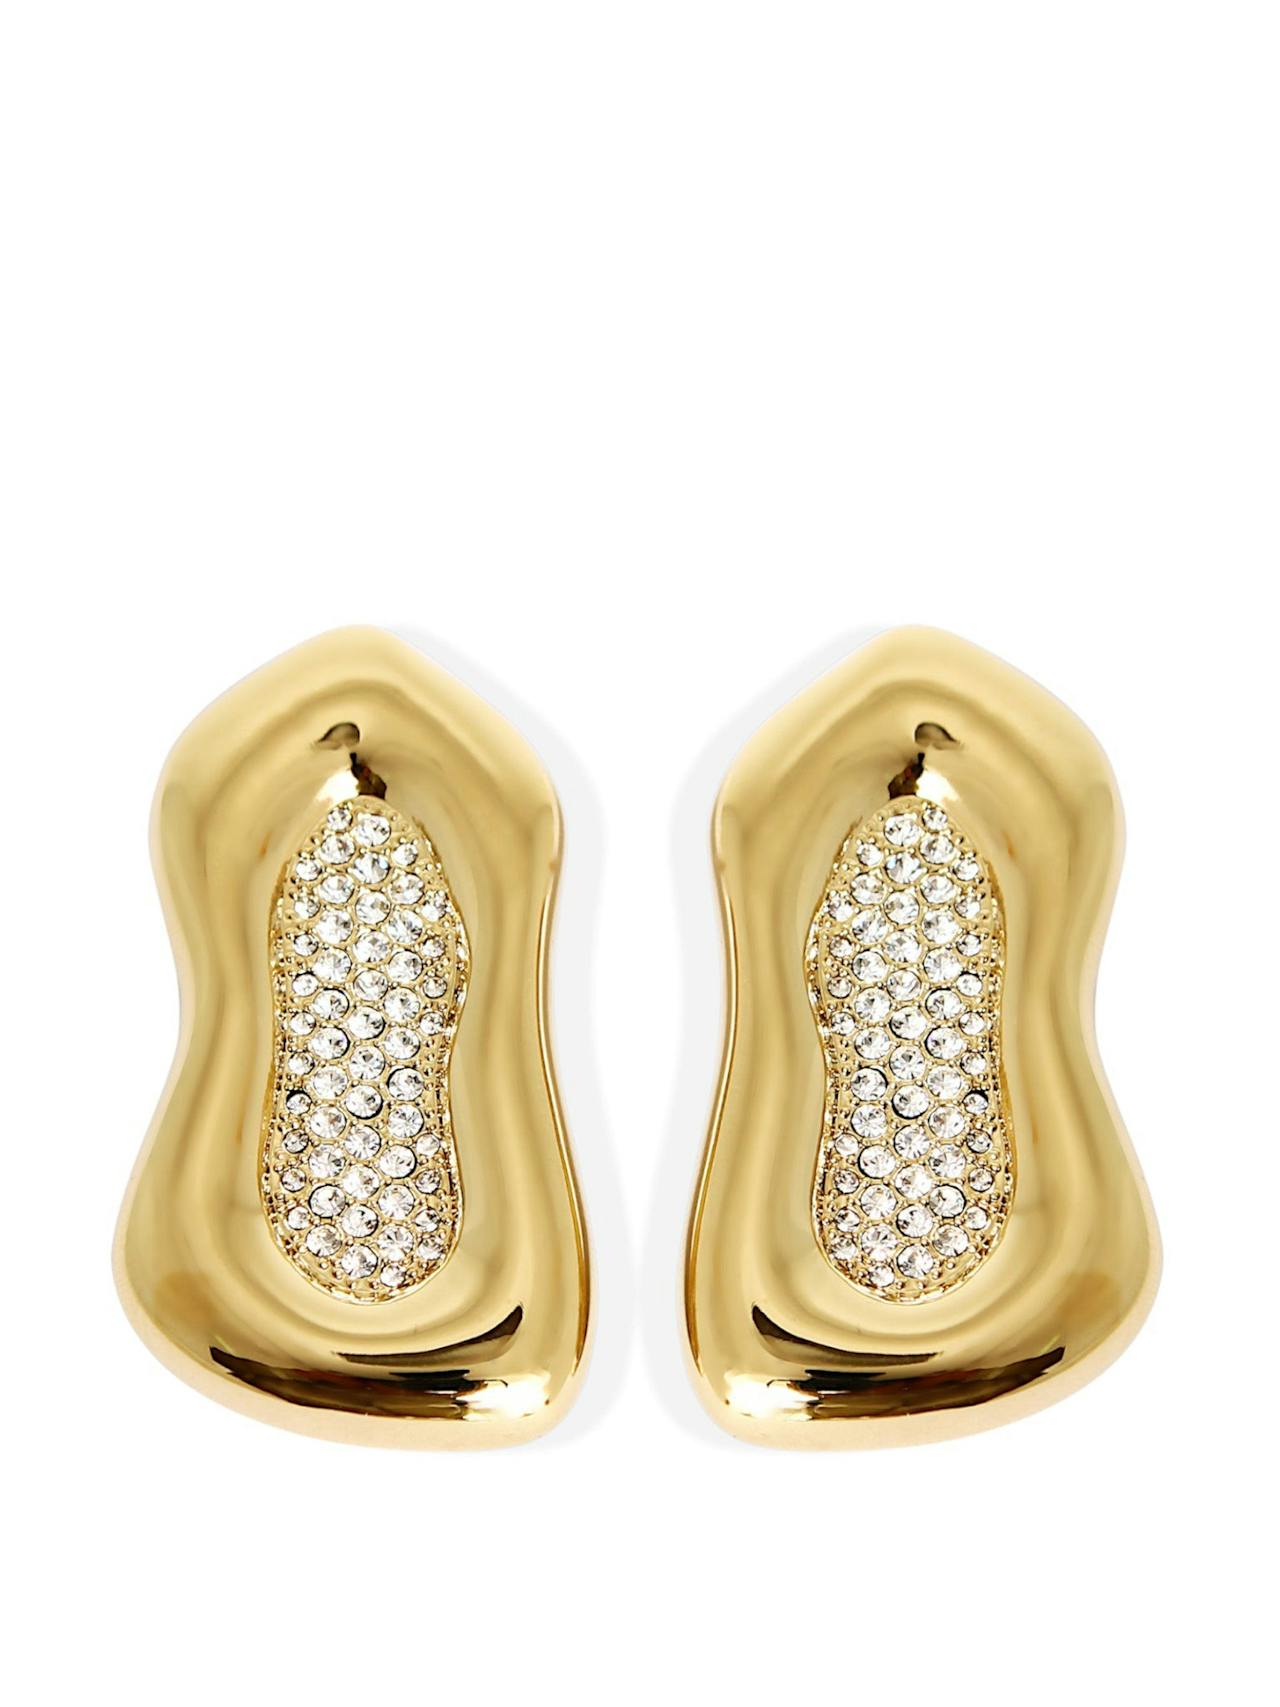 Gold and crystal Hailer earrings